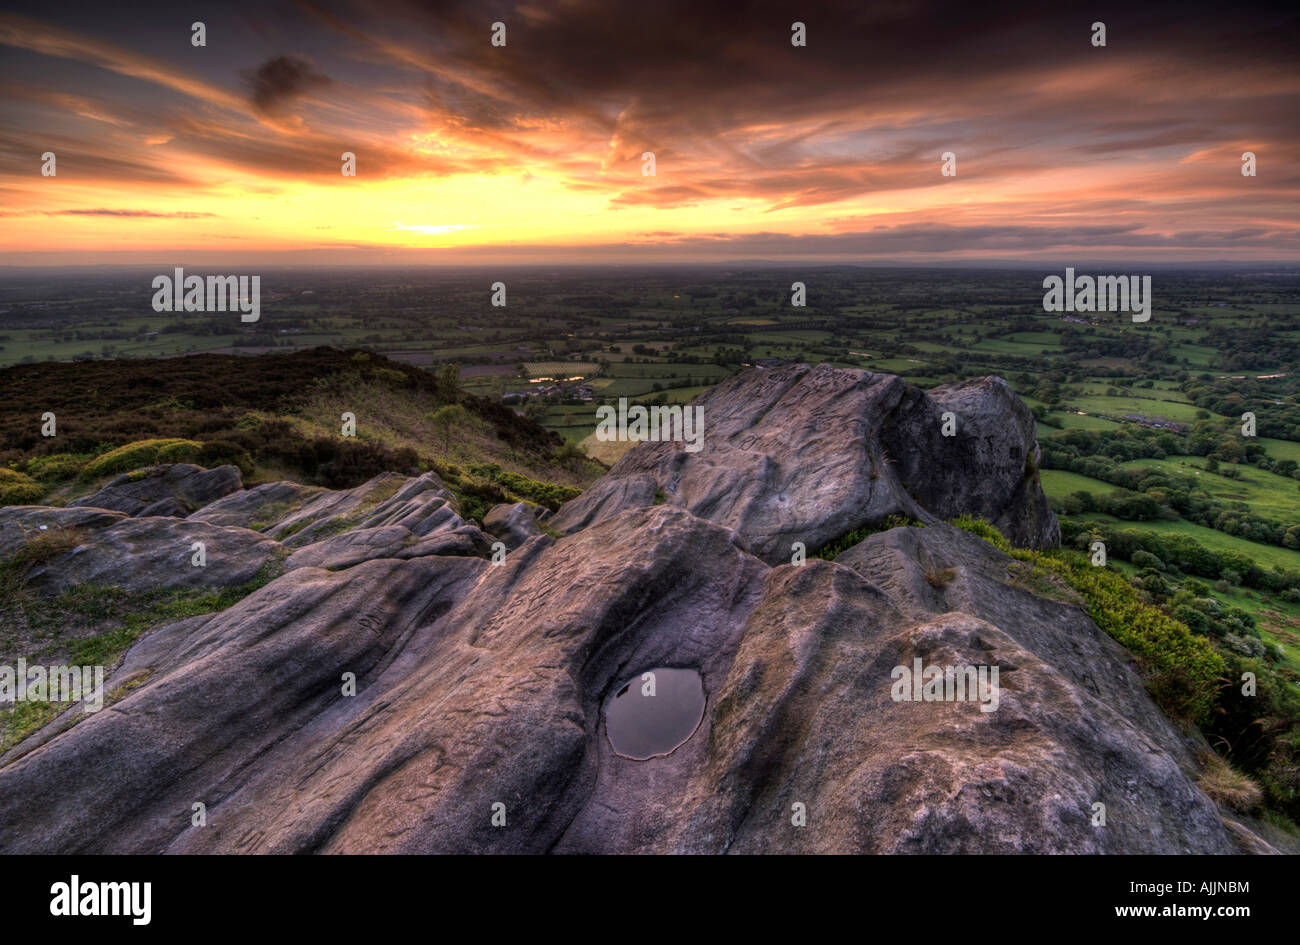 Sunsetting On Rocks At Cloudside Cheshire UK Stock Photo